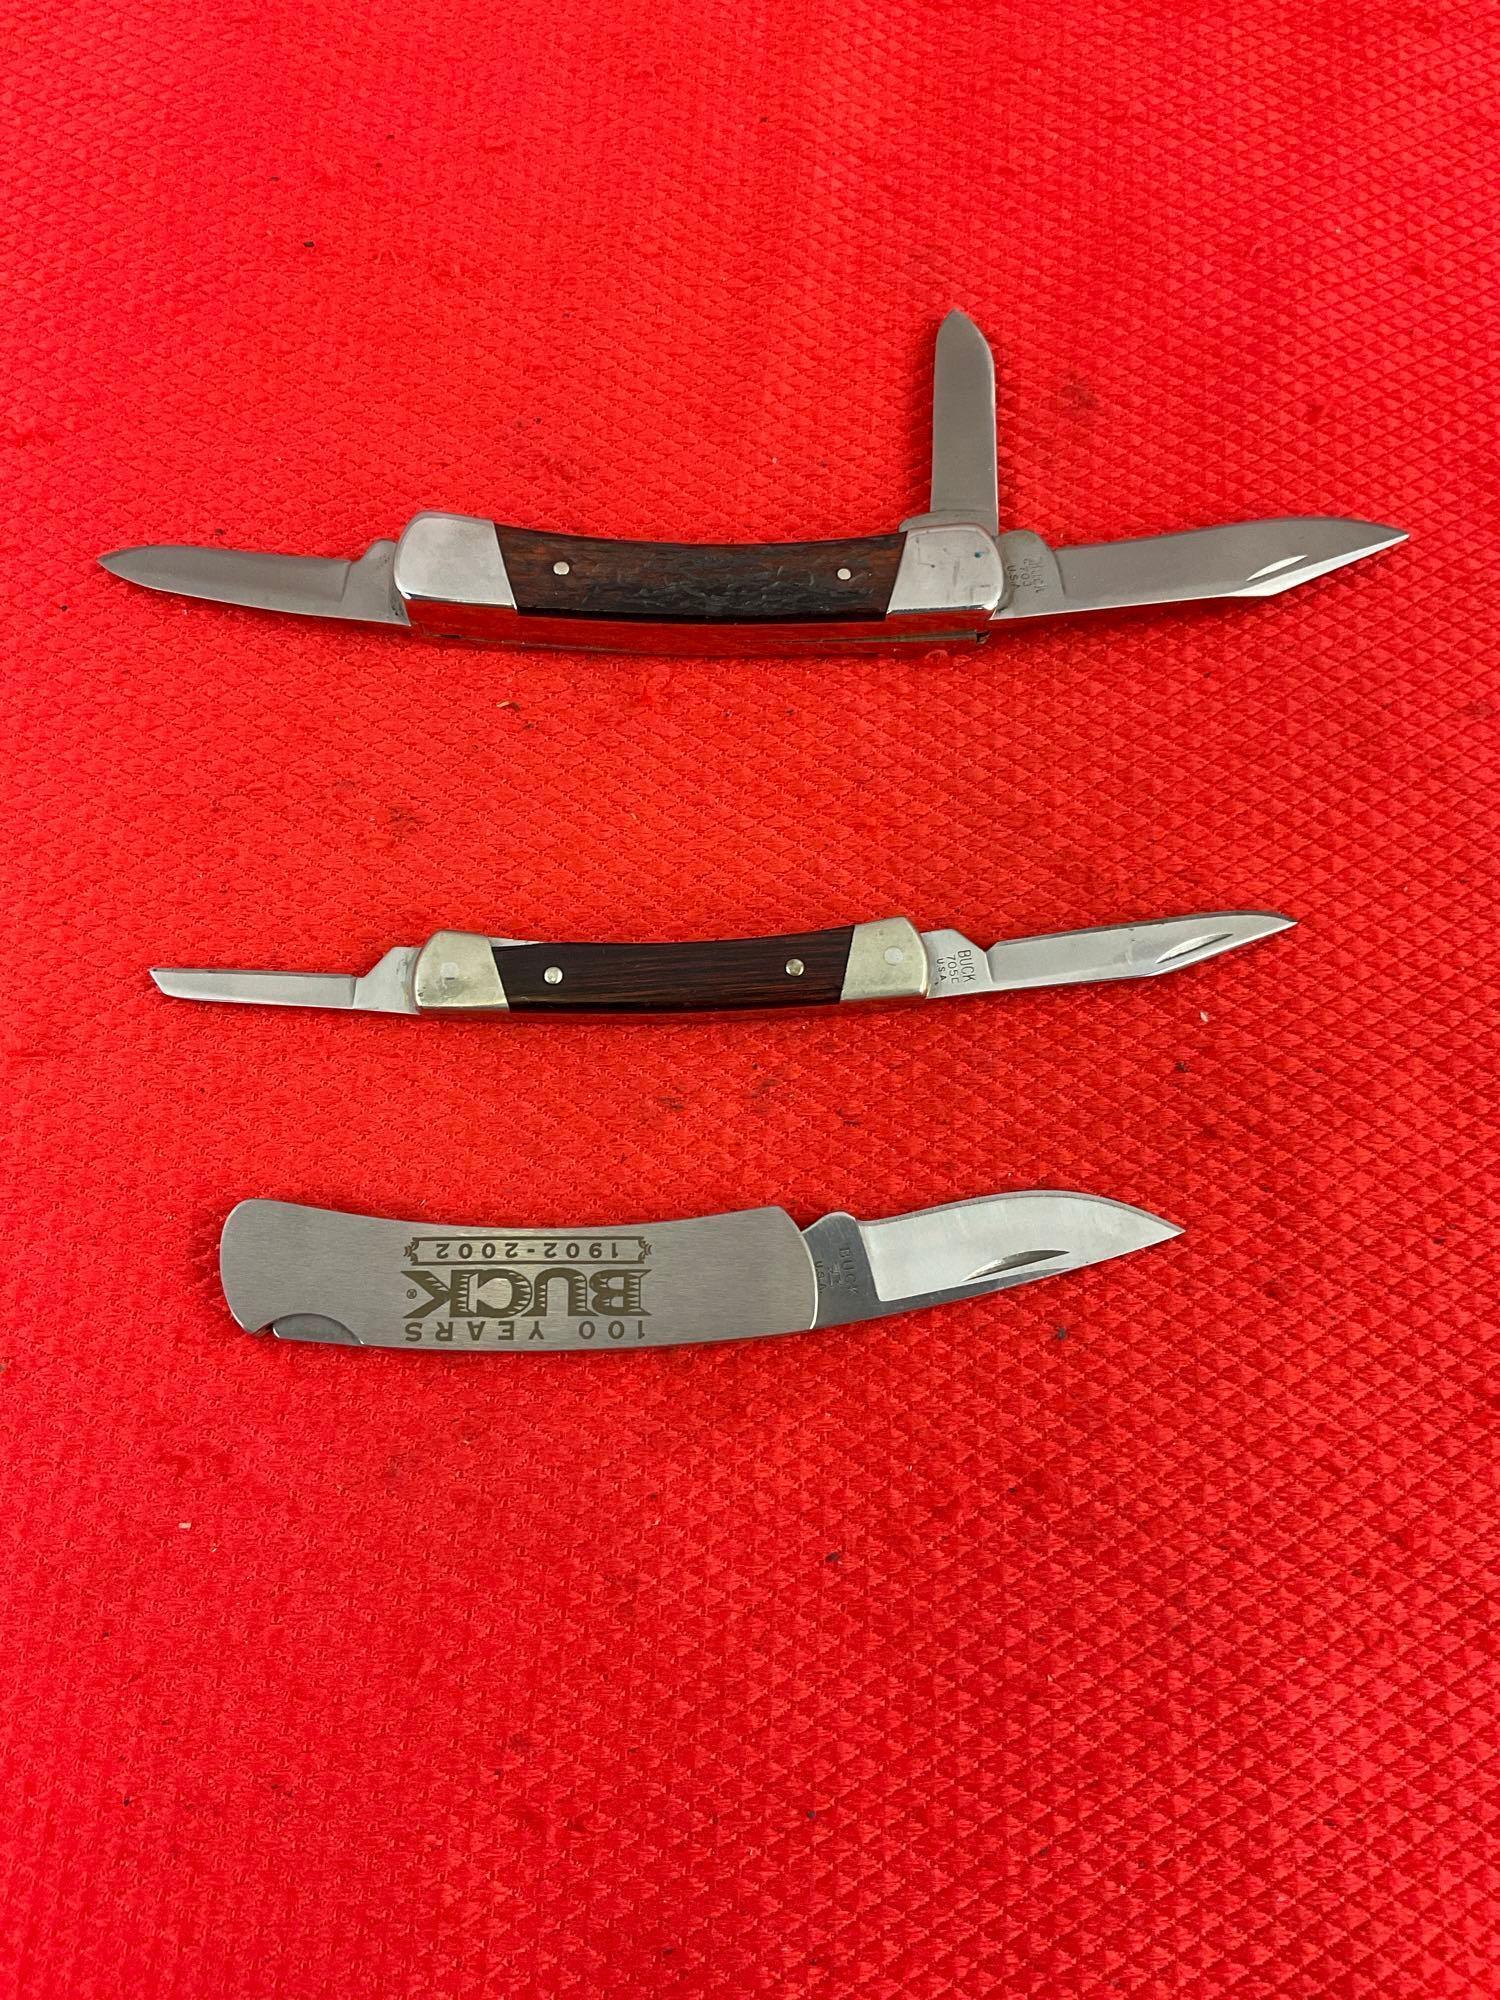 3 pcs Vintage Buck Steel Folding Blade Pocket Knives Models 703, 705 & B525 100 Year Edition. See